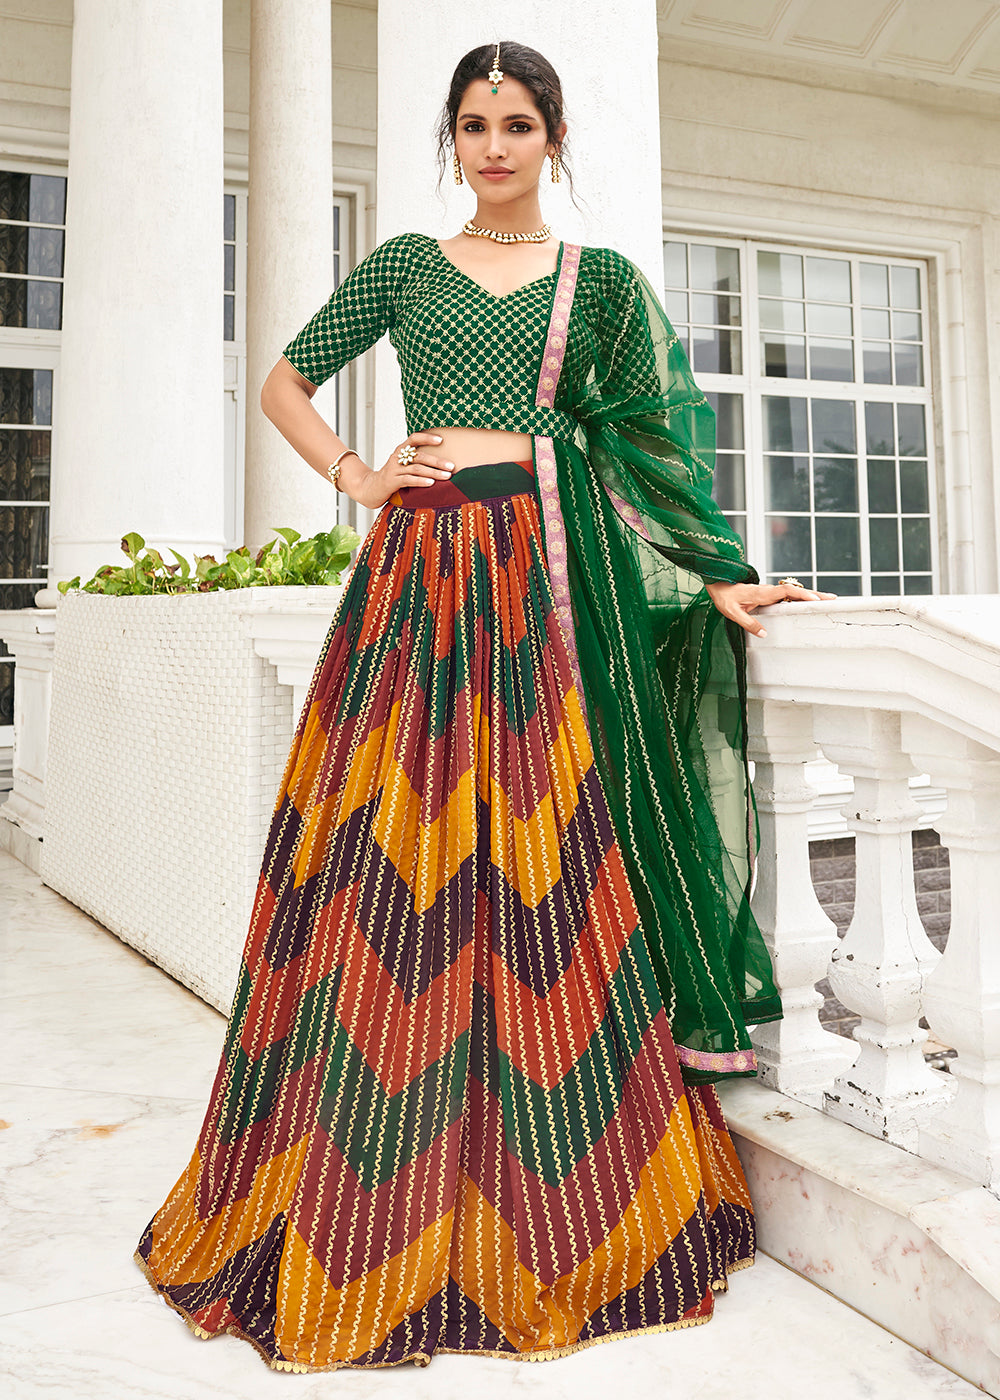 Buy Now Desirable Multicolor & Green Printed Wedding Lehenga Choli Online in USA, UK, Canada & Worldwide at Empress Clothing.